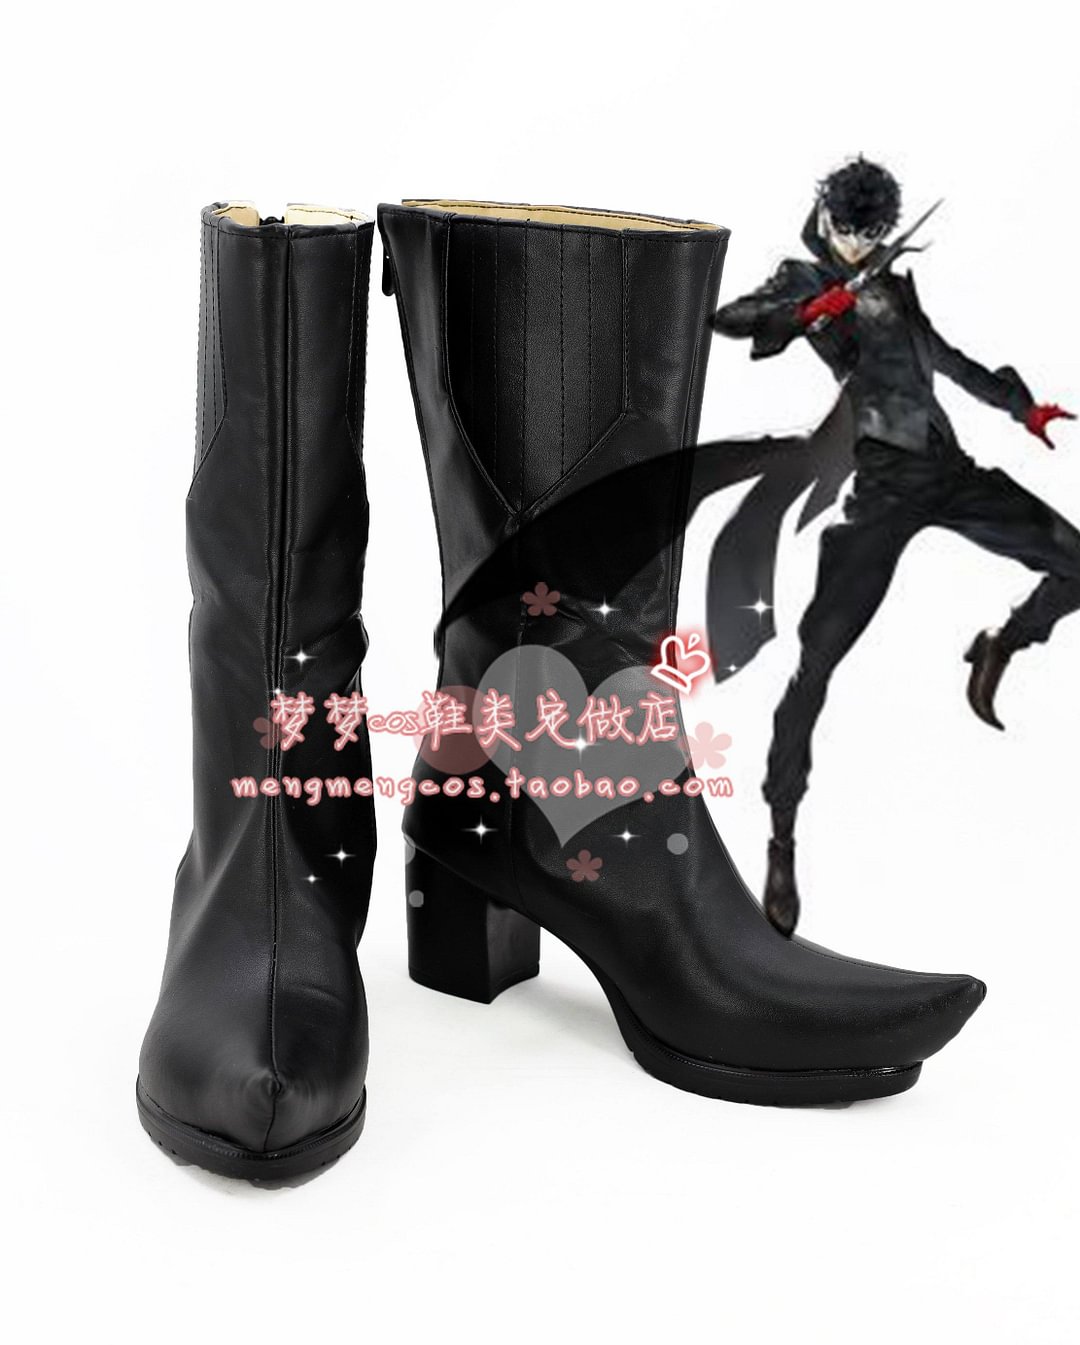 Persona 5 Protagonist Akira Kurusu Joker Schuhe Stiefel Cosplay Schuhe